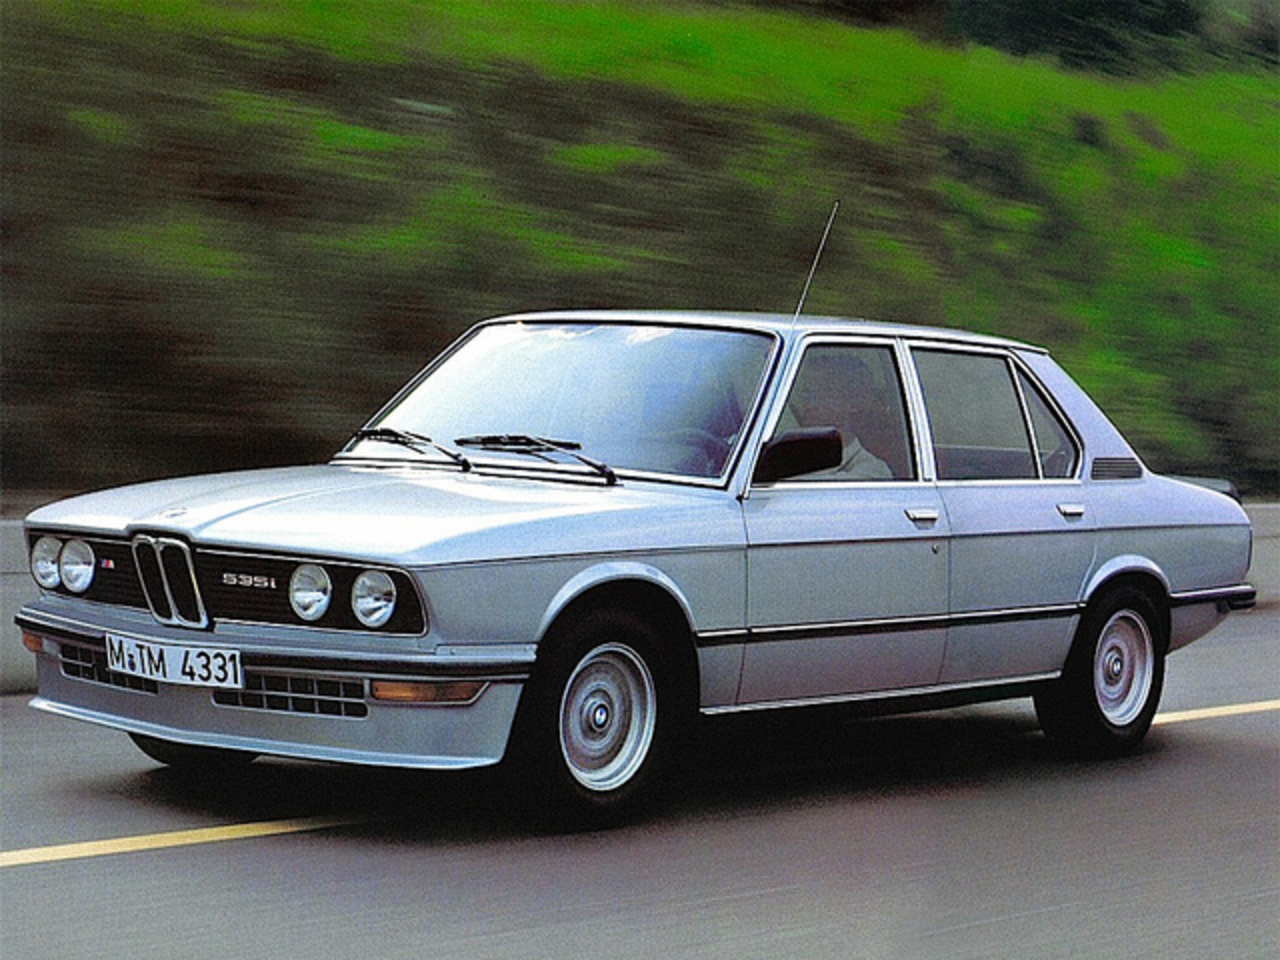 BMW M535i (E12) | Flickr - Photo Sharing!